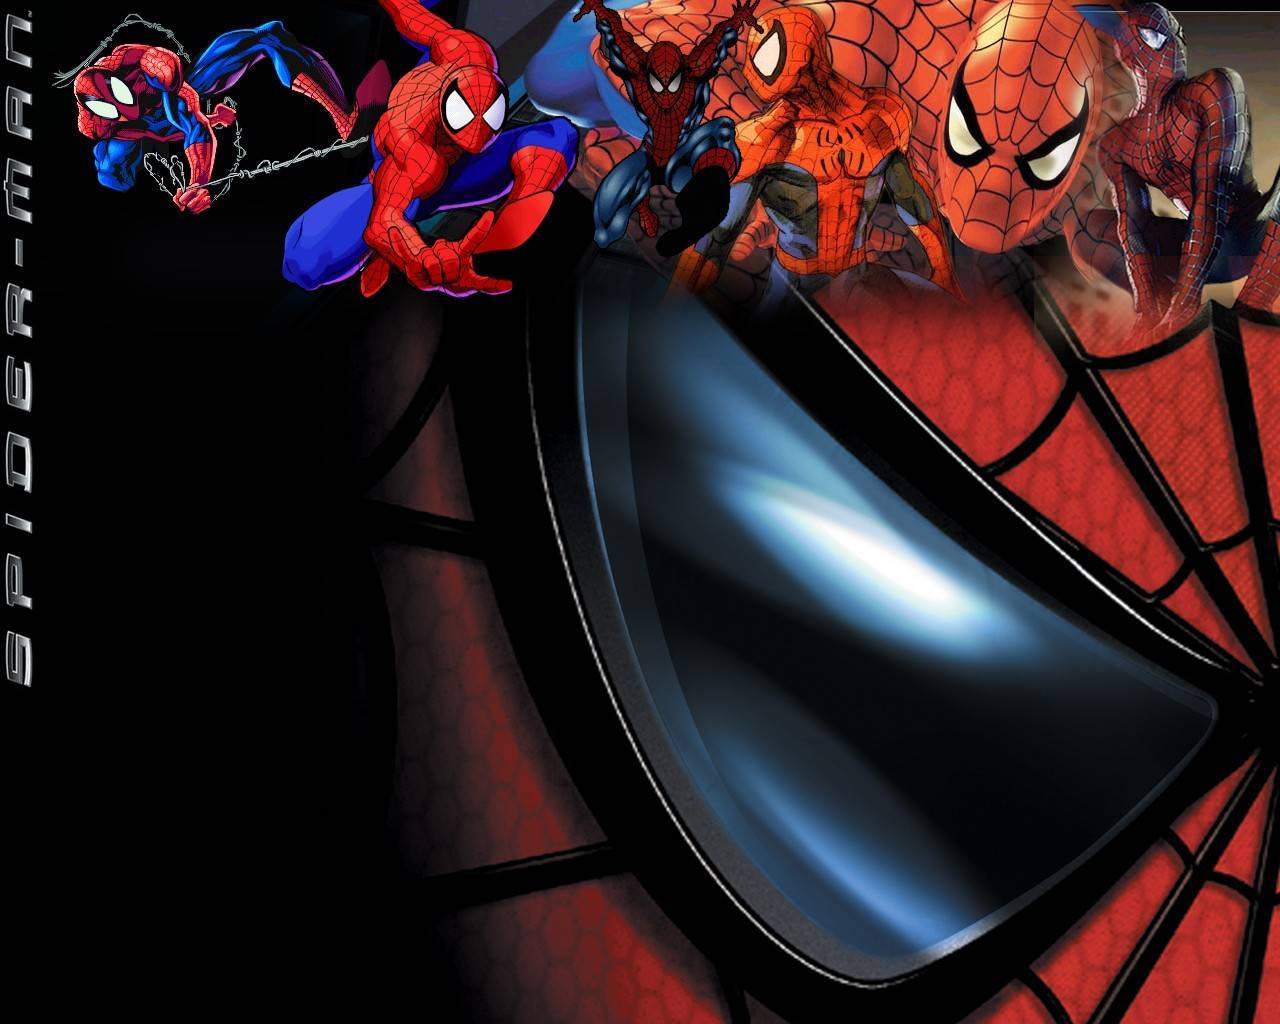  75 Spiderman  Cartoon  Wallpapers  on WallpaperSafari